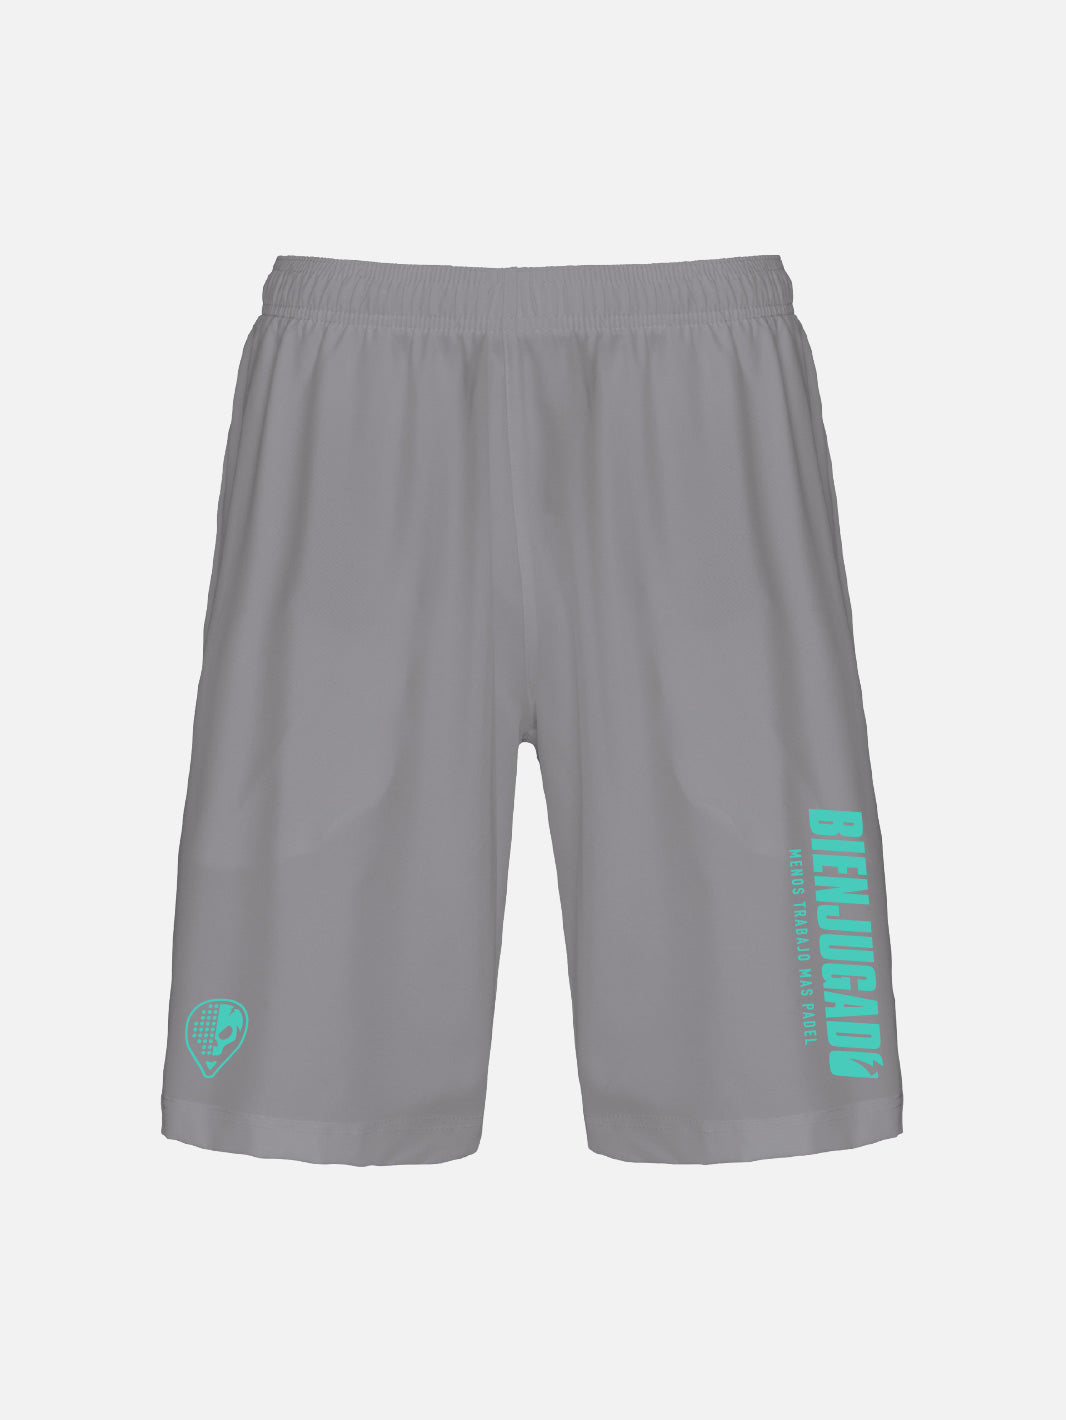 Men's Shorts - Fine Grey